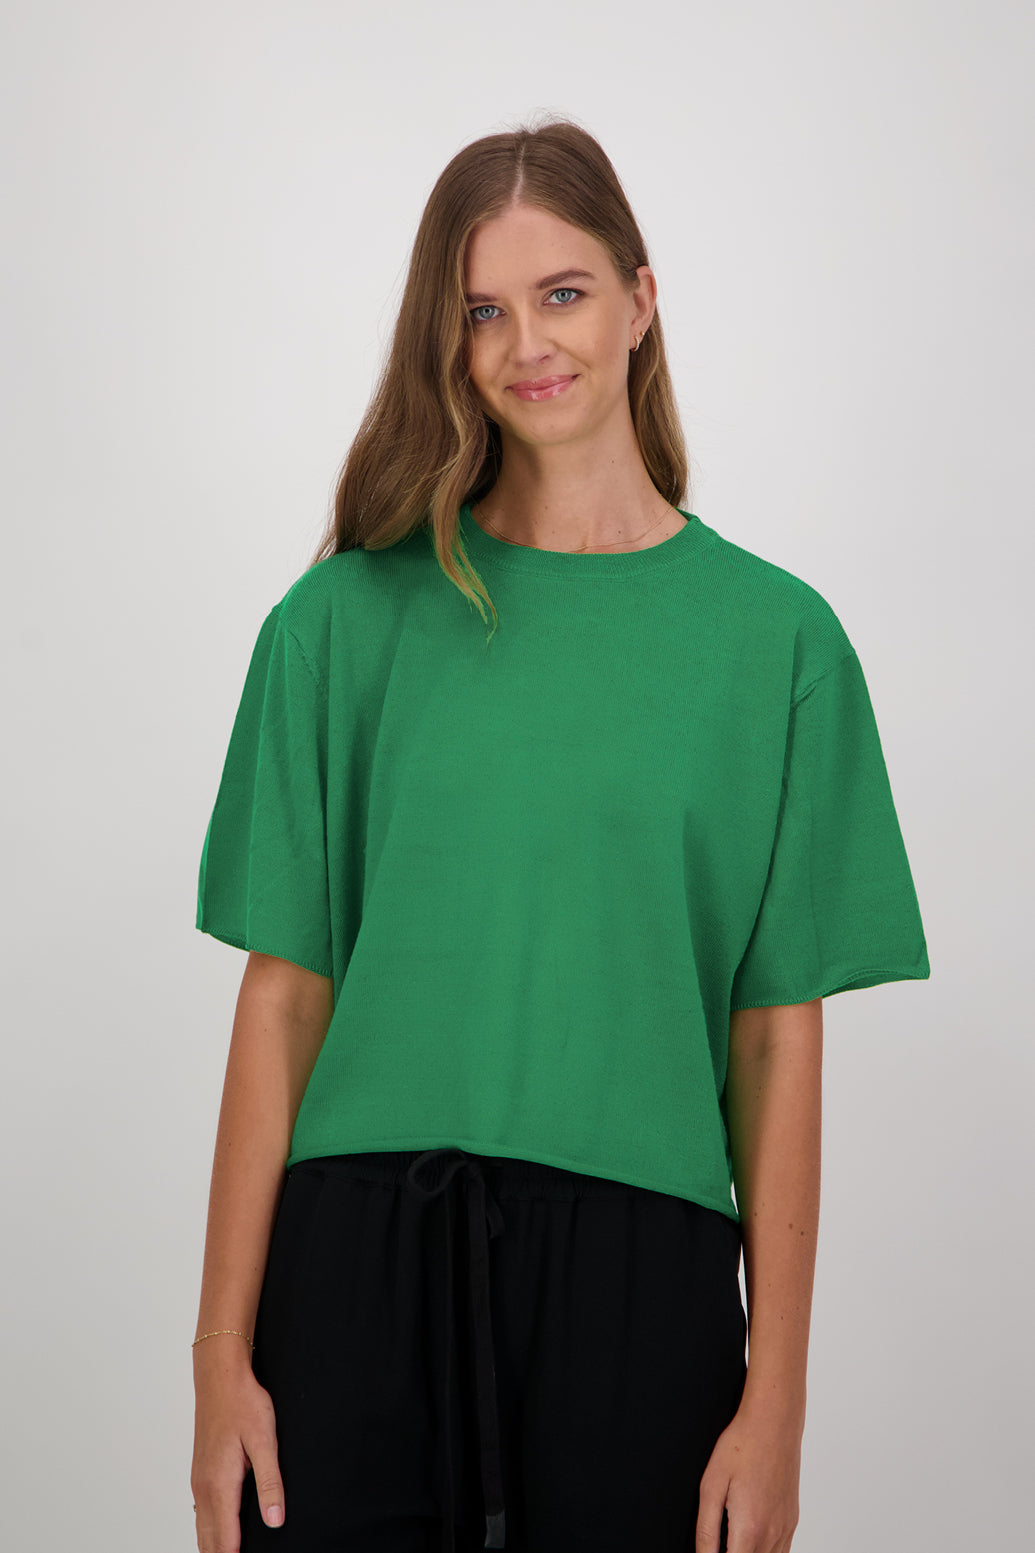 Danielle 100% Wool Short Sleeve Top/TShirt - Apple